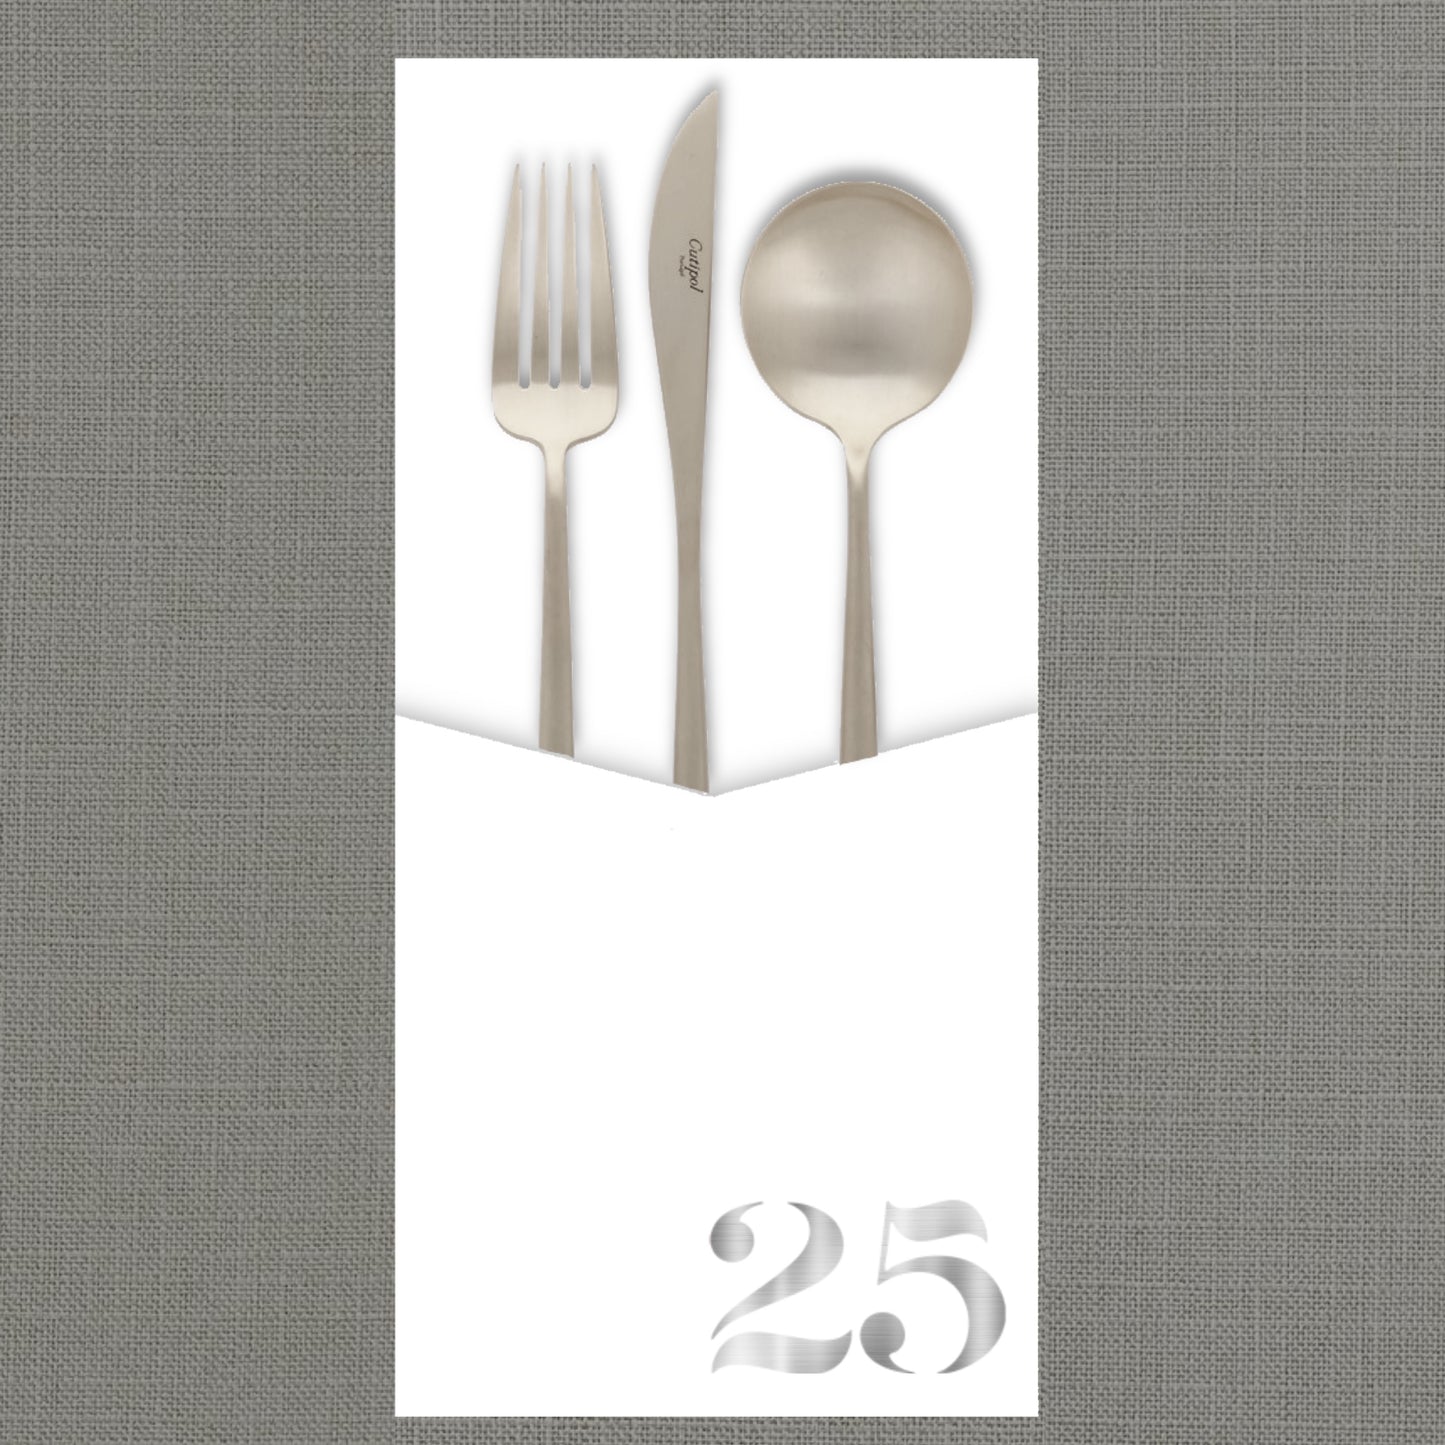 Foil Celebrate! 25 - Cutlery Pouch